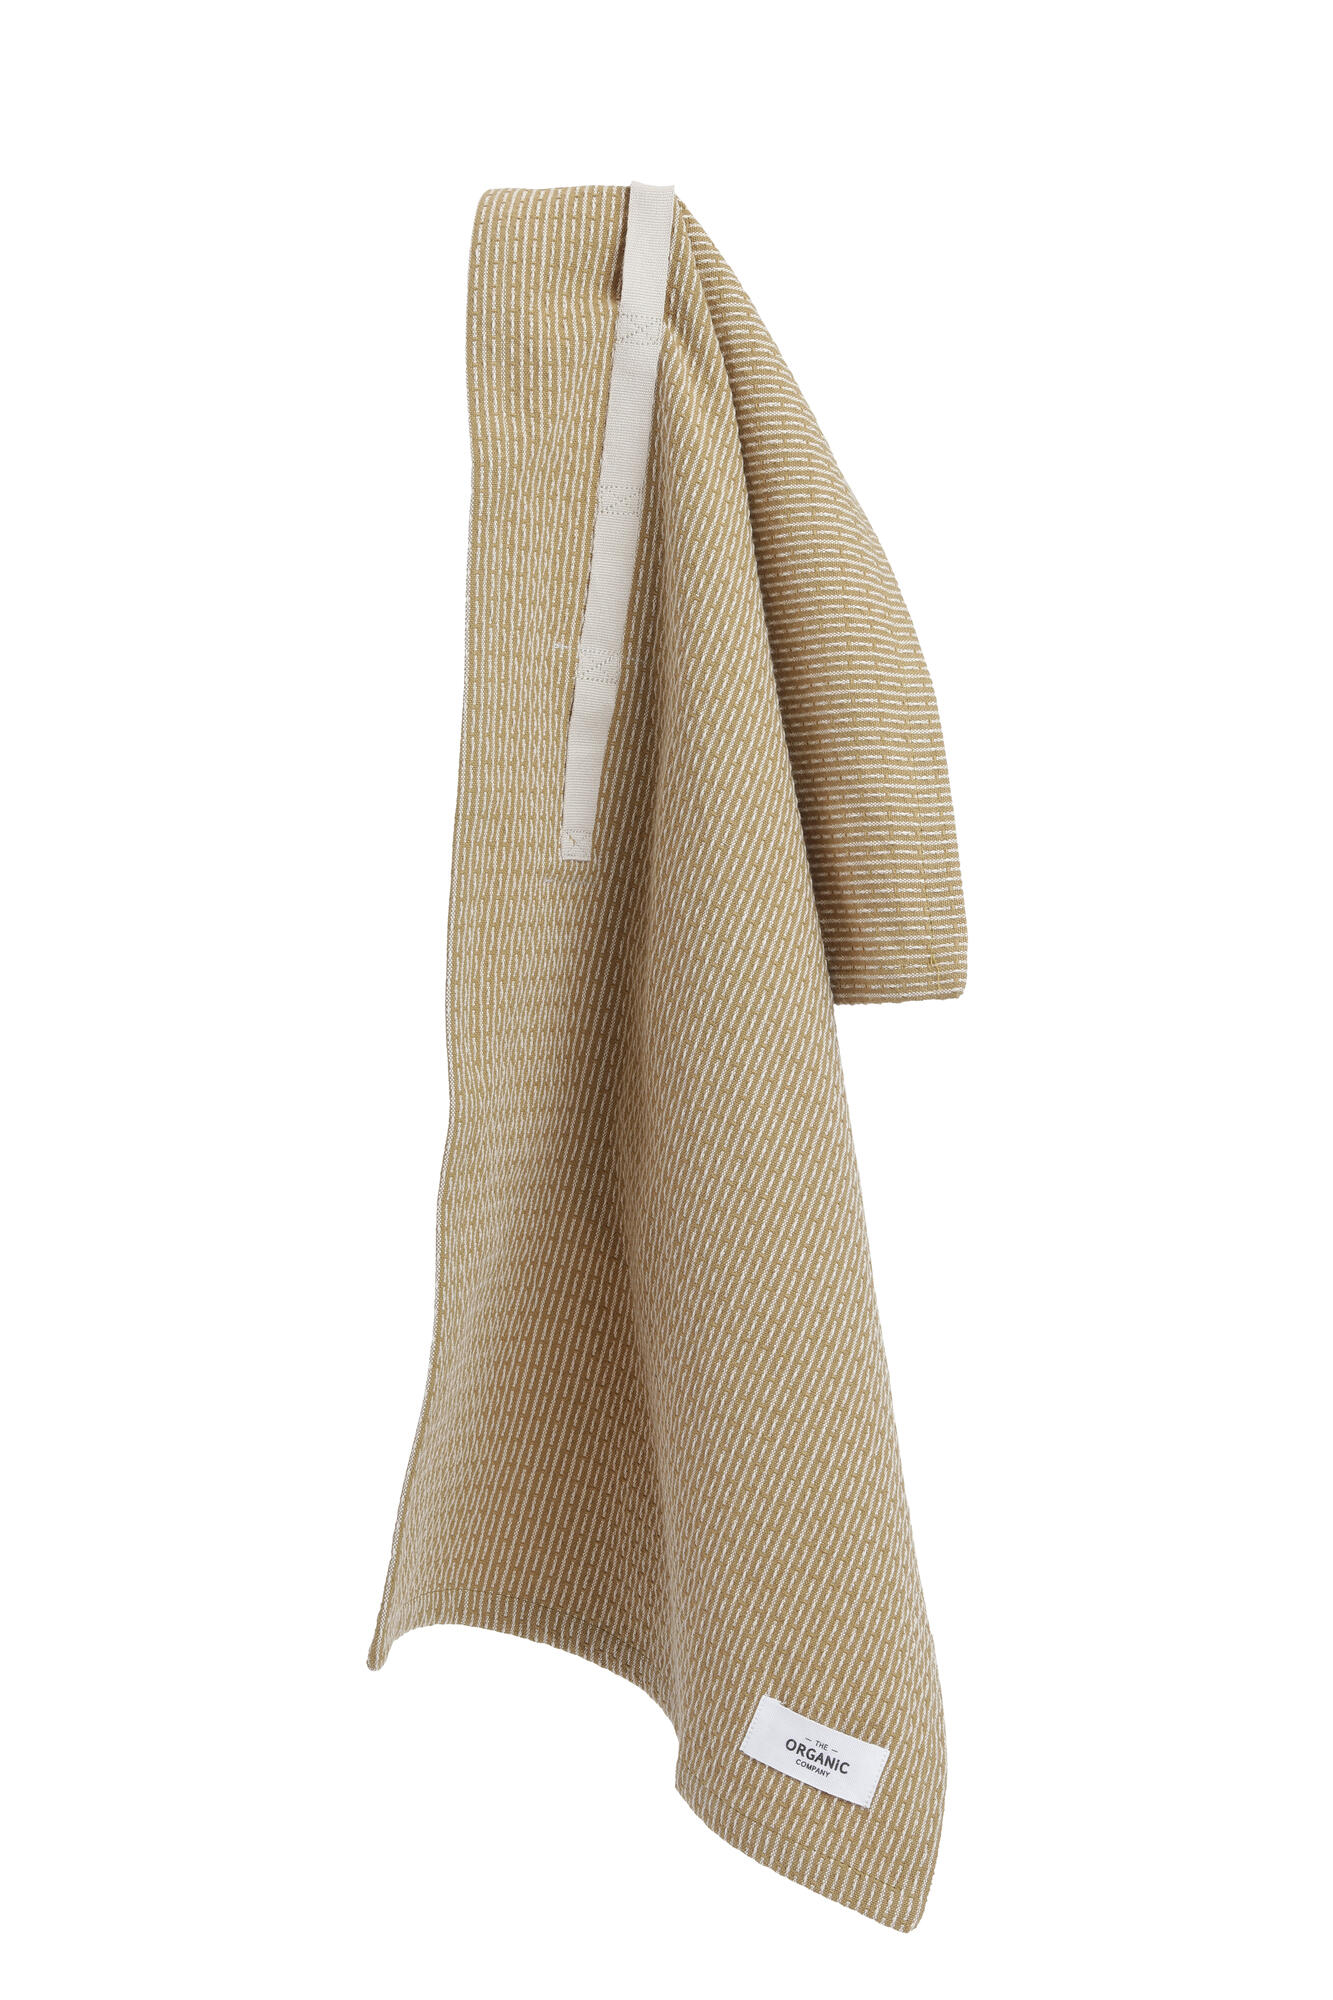 Håndklæde - Khaki / lys beige 35 x 60 cm